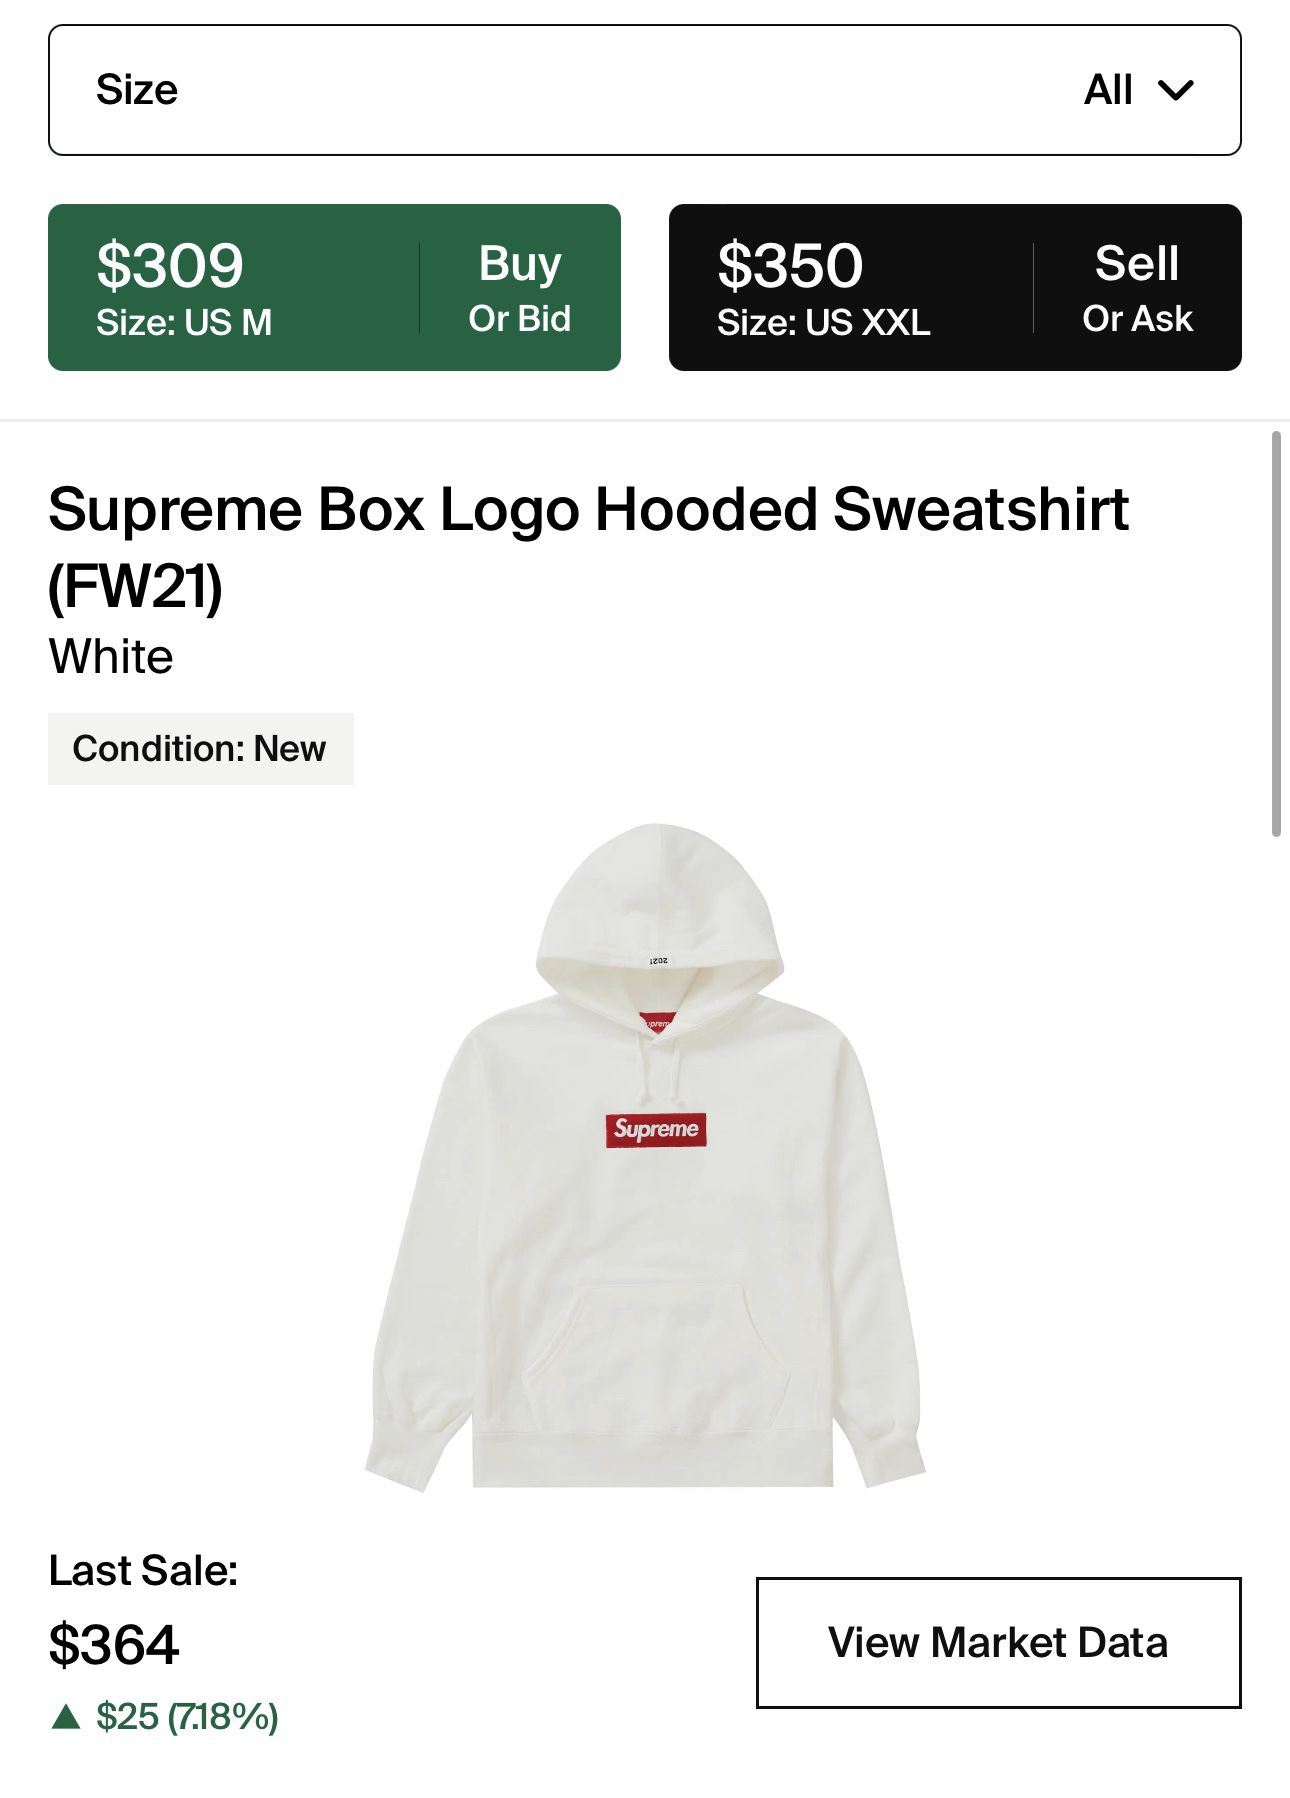 Supreme Box Logo Hooded Sweatshirt Size M